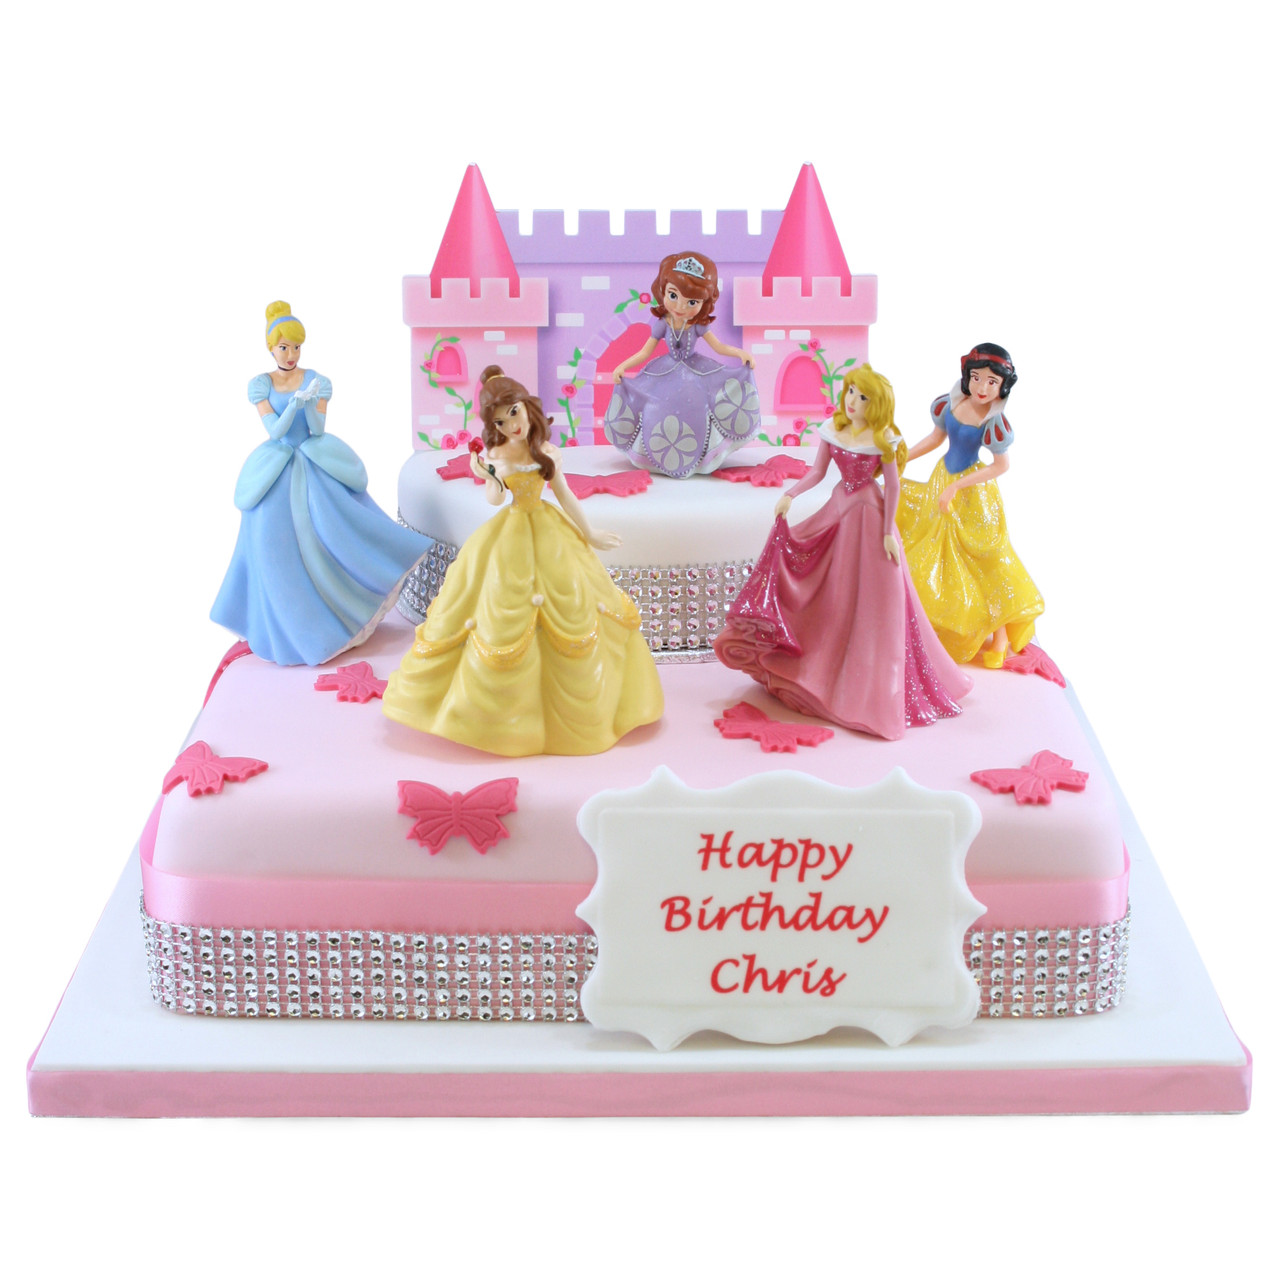 Princess |Two Tier Cake|The Cake Store